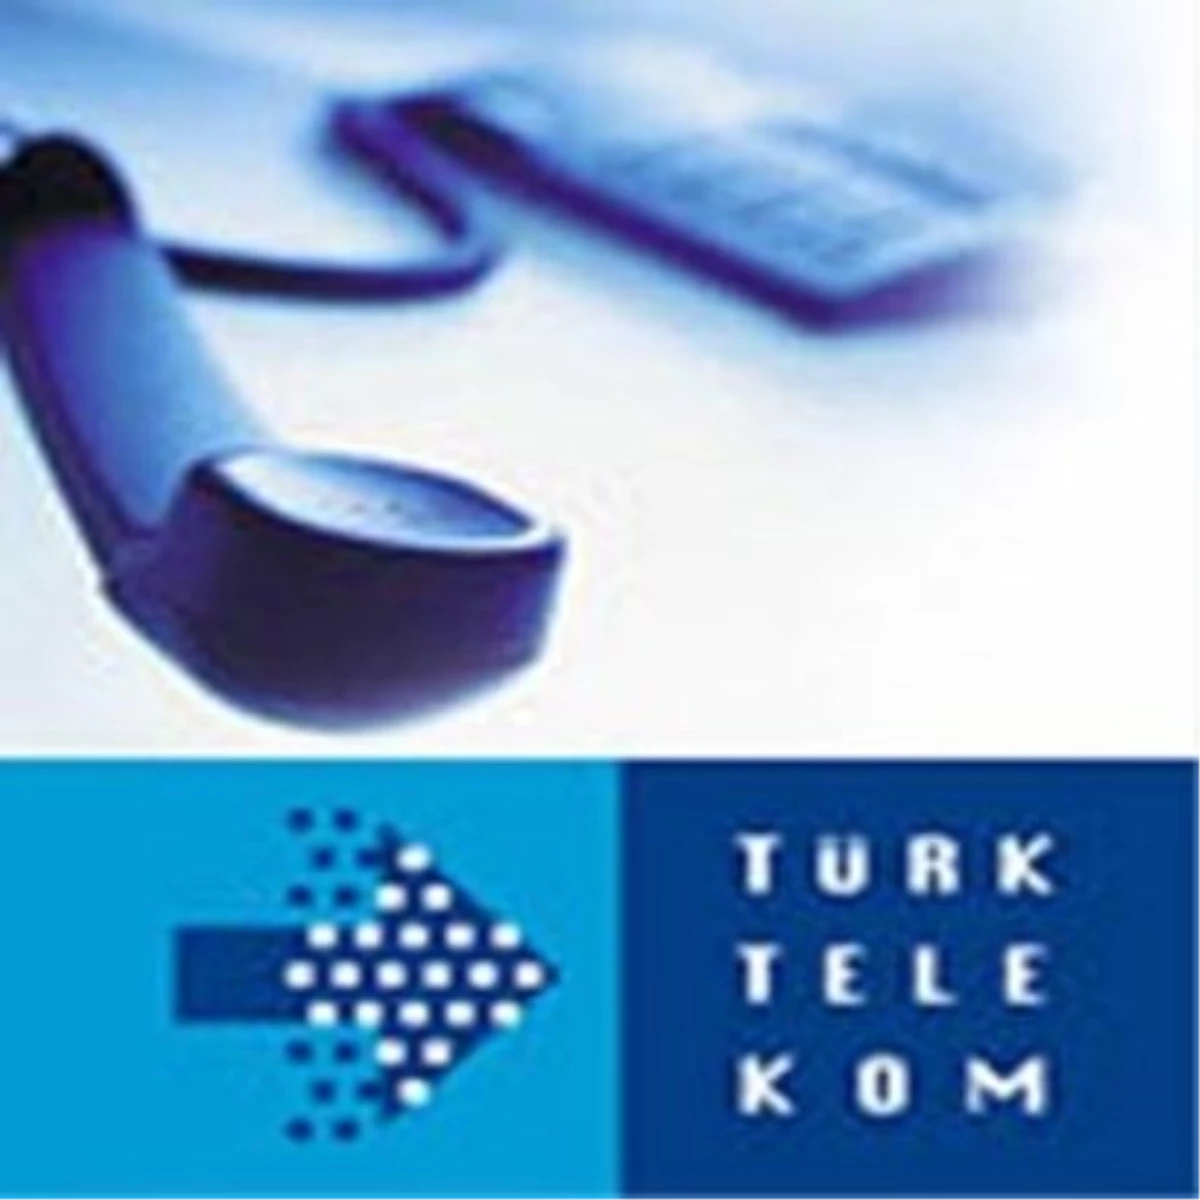 Turk Telekomunıkasyon A.s. Sgbf-Yonetımde Soz Sahıbı Olan Personel 12.12.2013 08:07:27